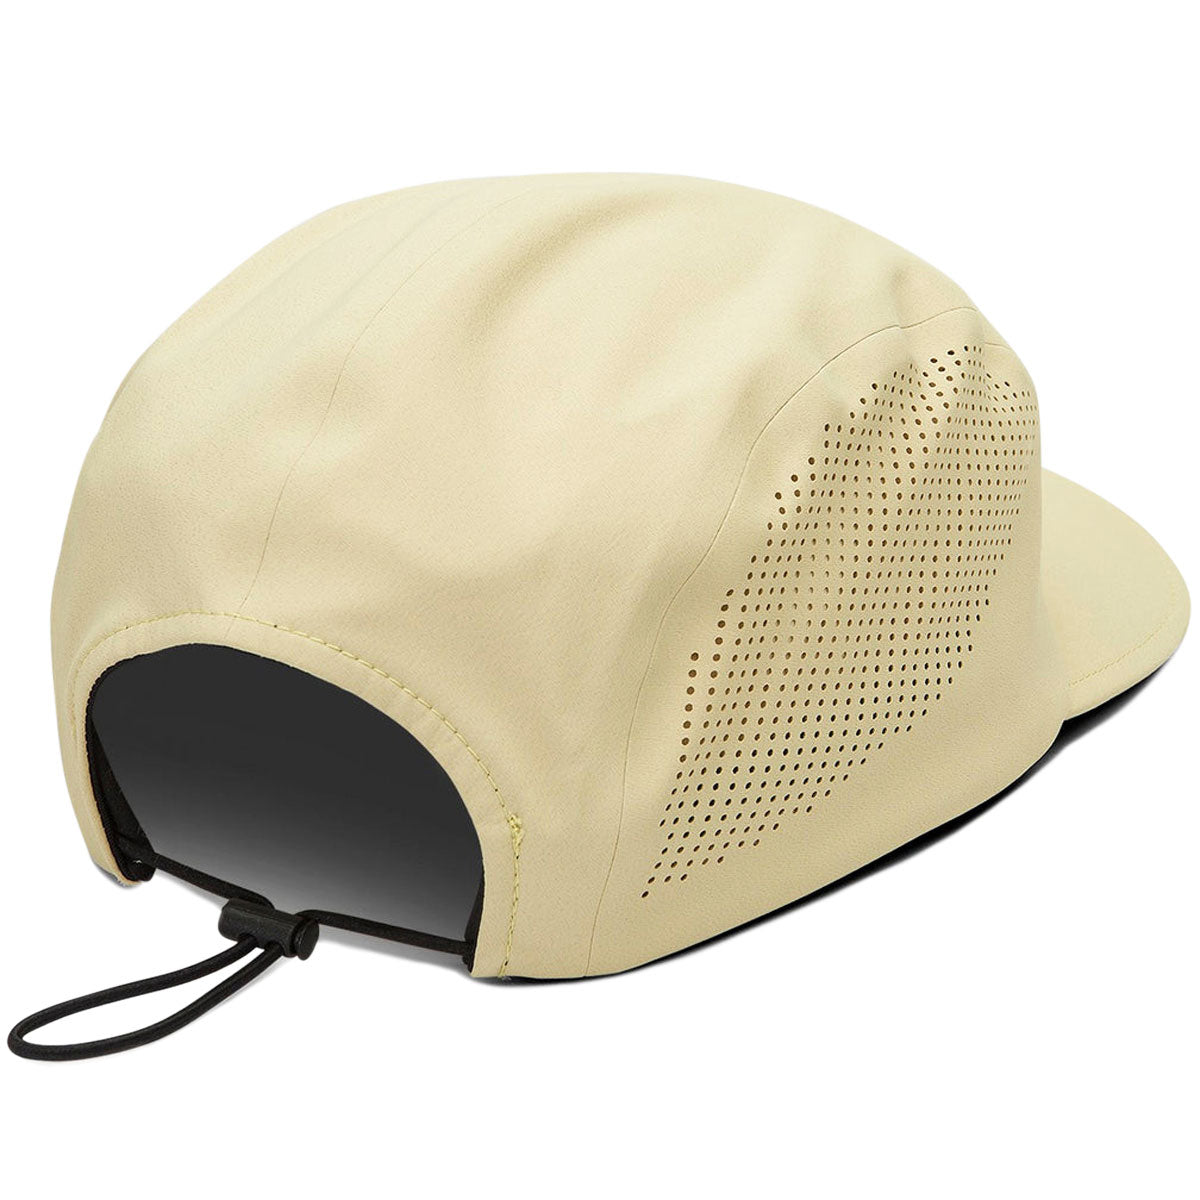 Volcom Stone Tech Delta Camper Adjustable Hat - Khaki image 2